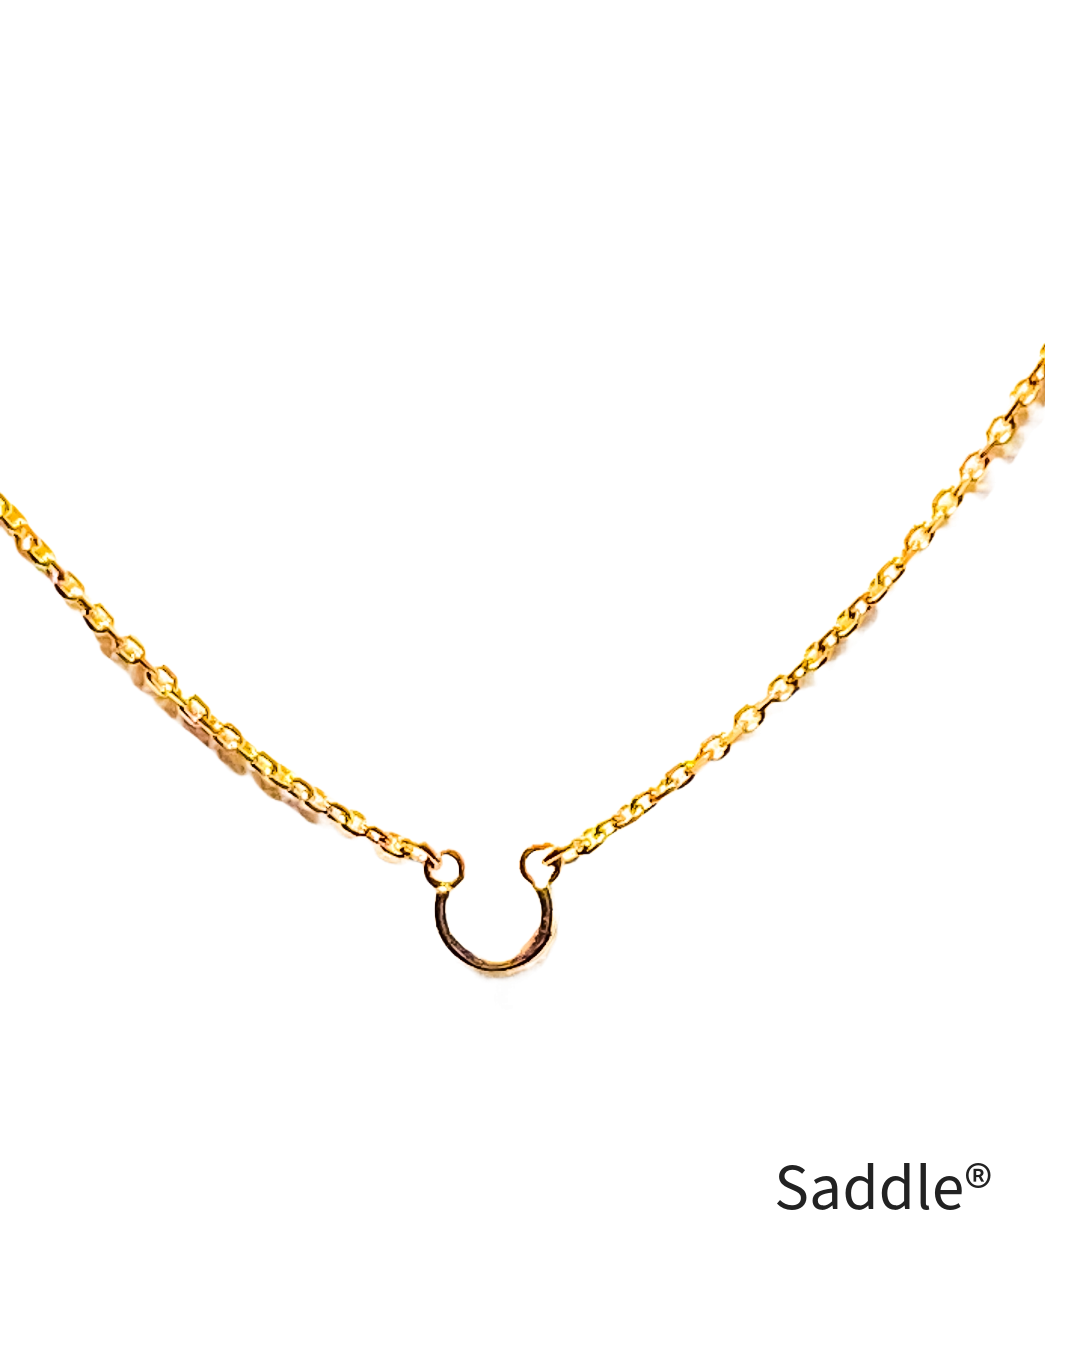 14k White Gold Adjustable 16/18″ Chain the Pendant Saddle®